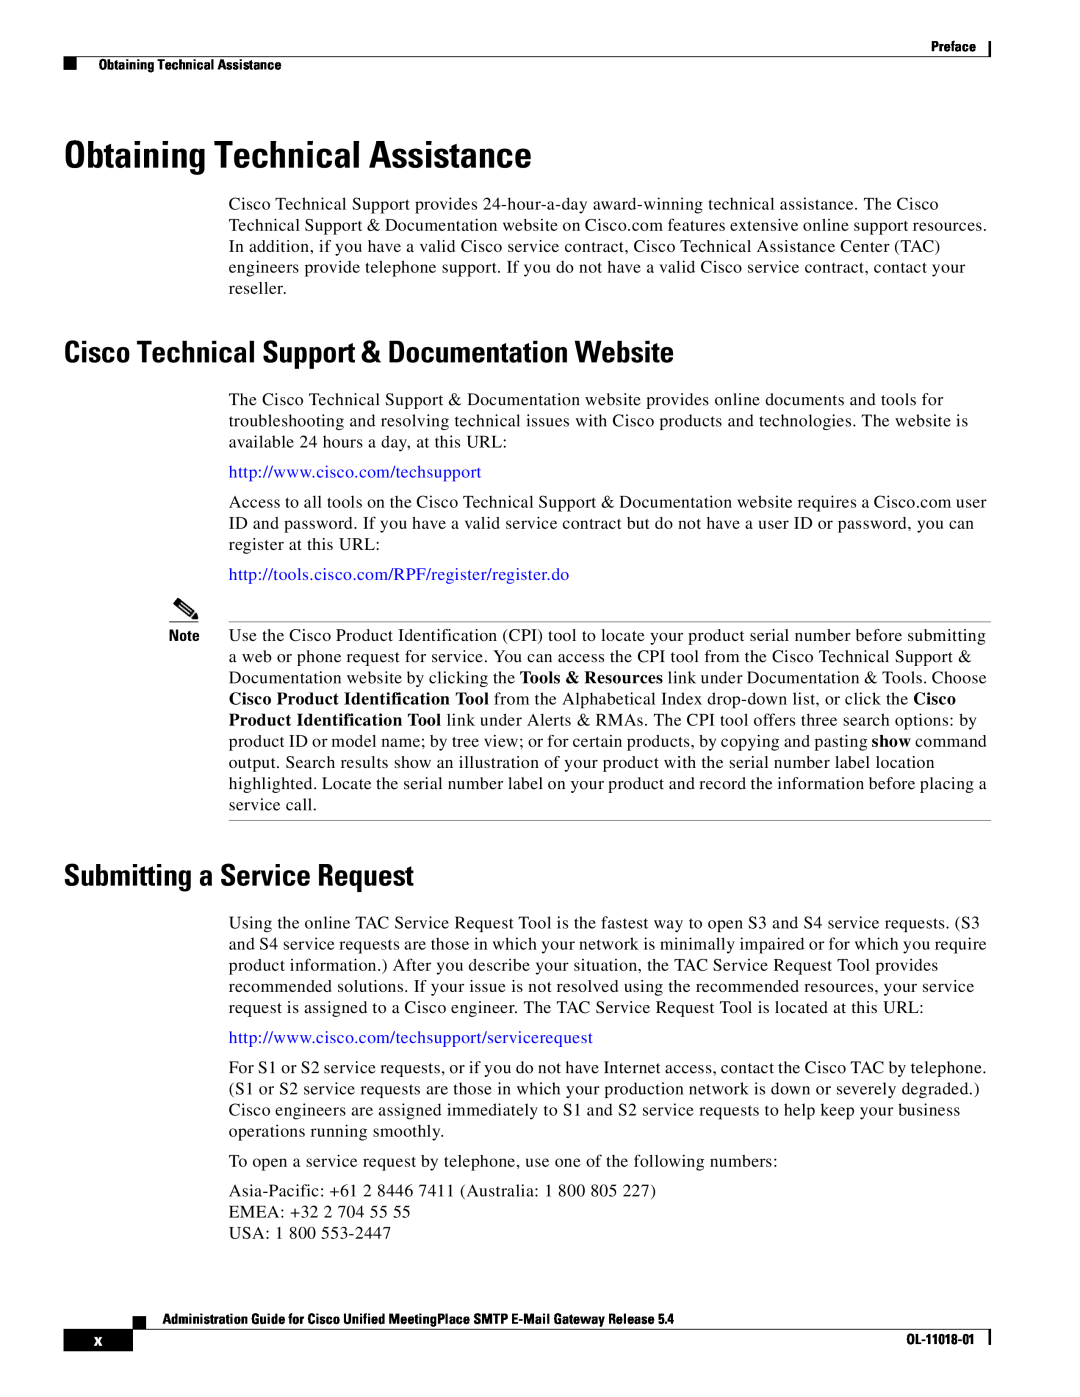 Cisco Systems SMTP manual Obtaining Technical Assistance, Cisco Technical Support & Documentation Website 